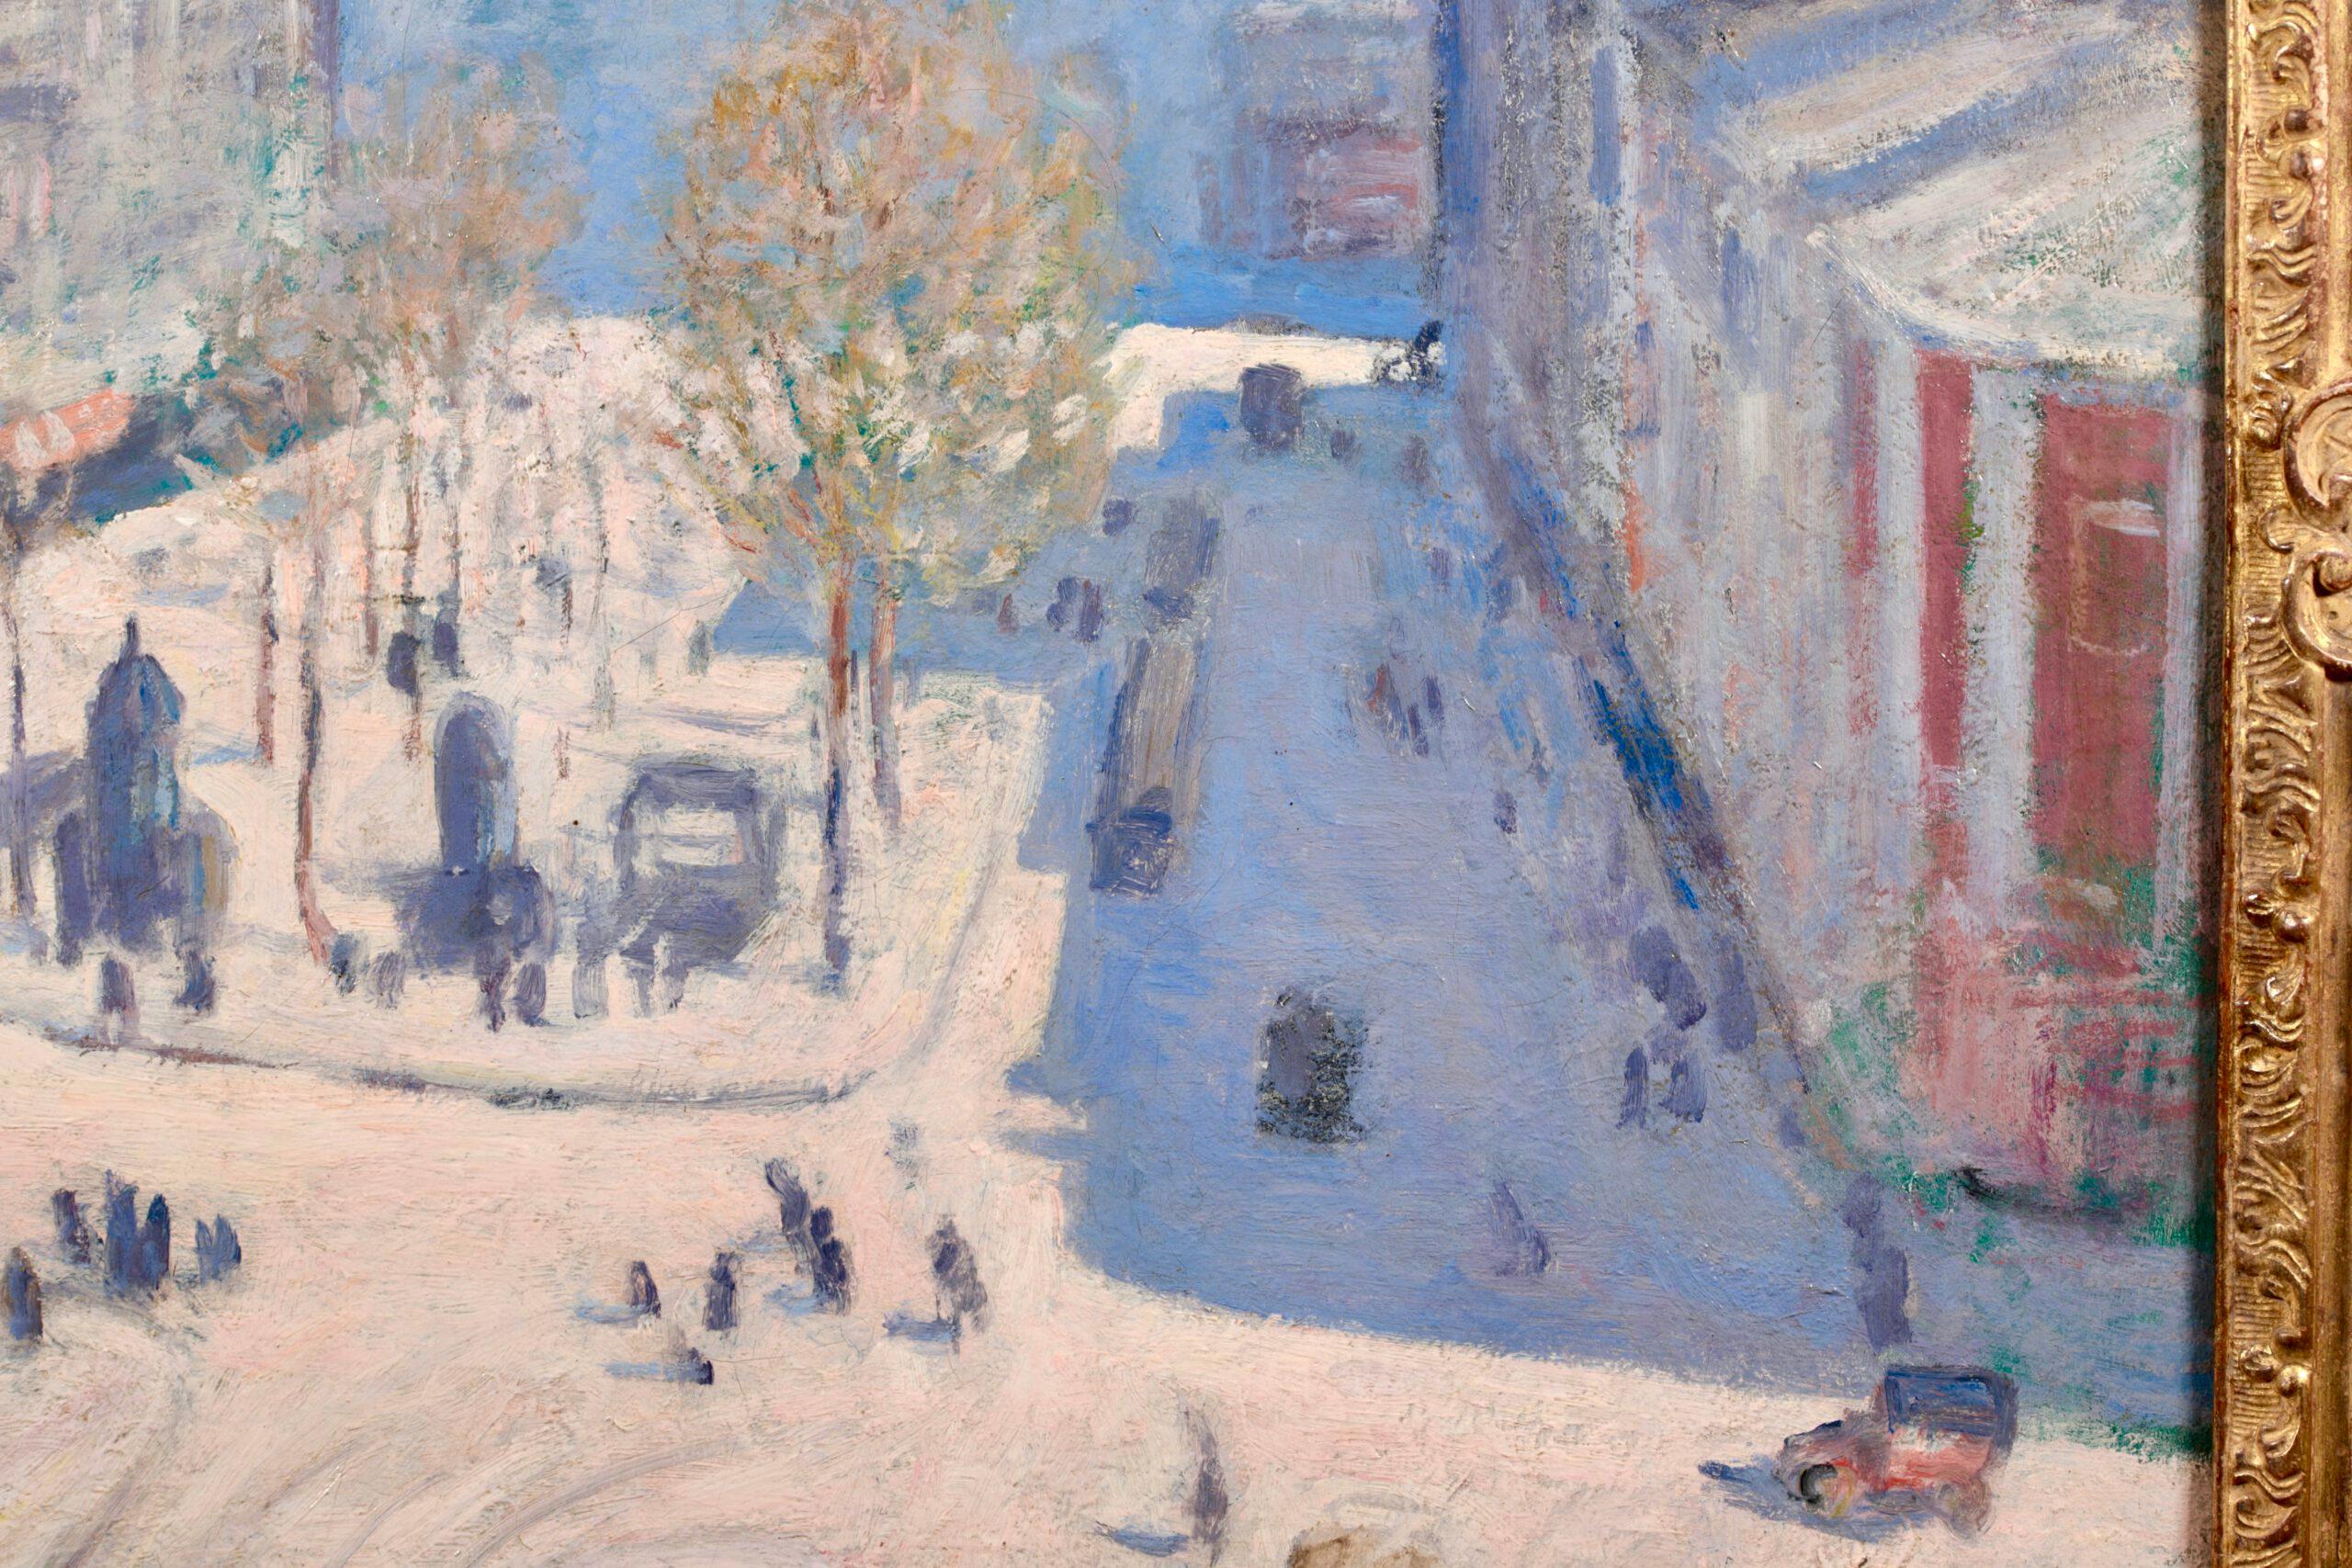 Boulevard De Clichy - Post Impressionist City Landscape Painting by Albert Andre For Sale 3